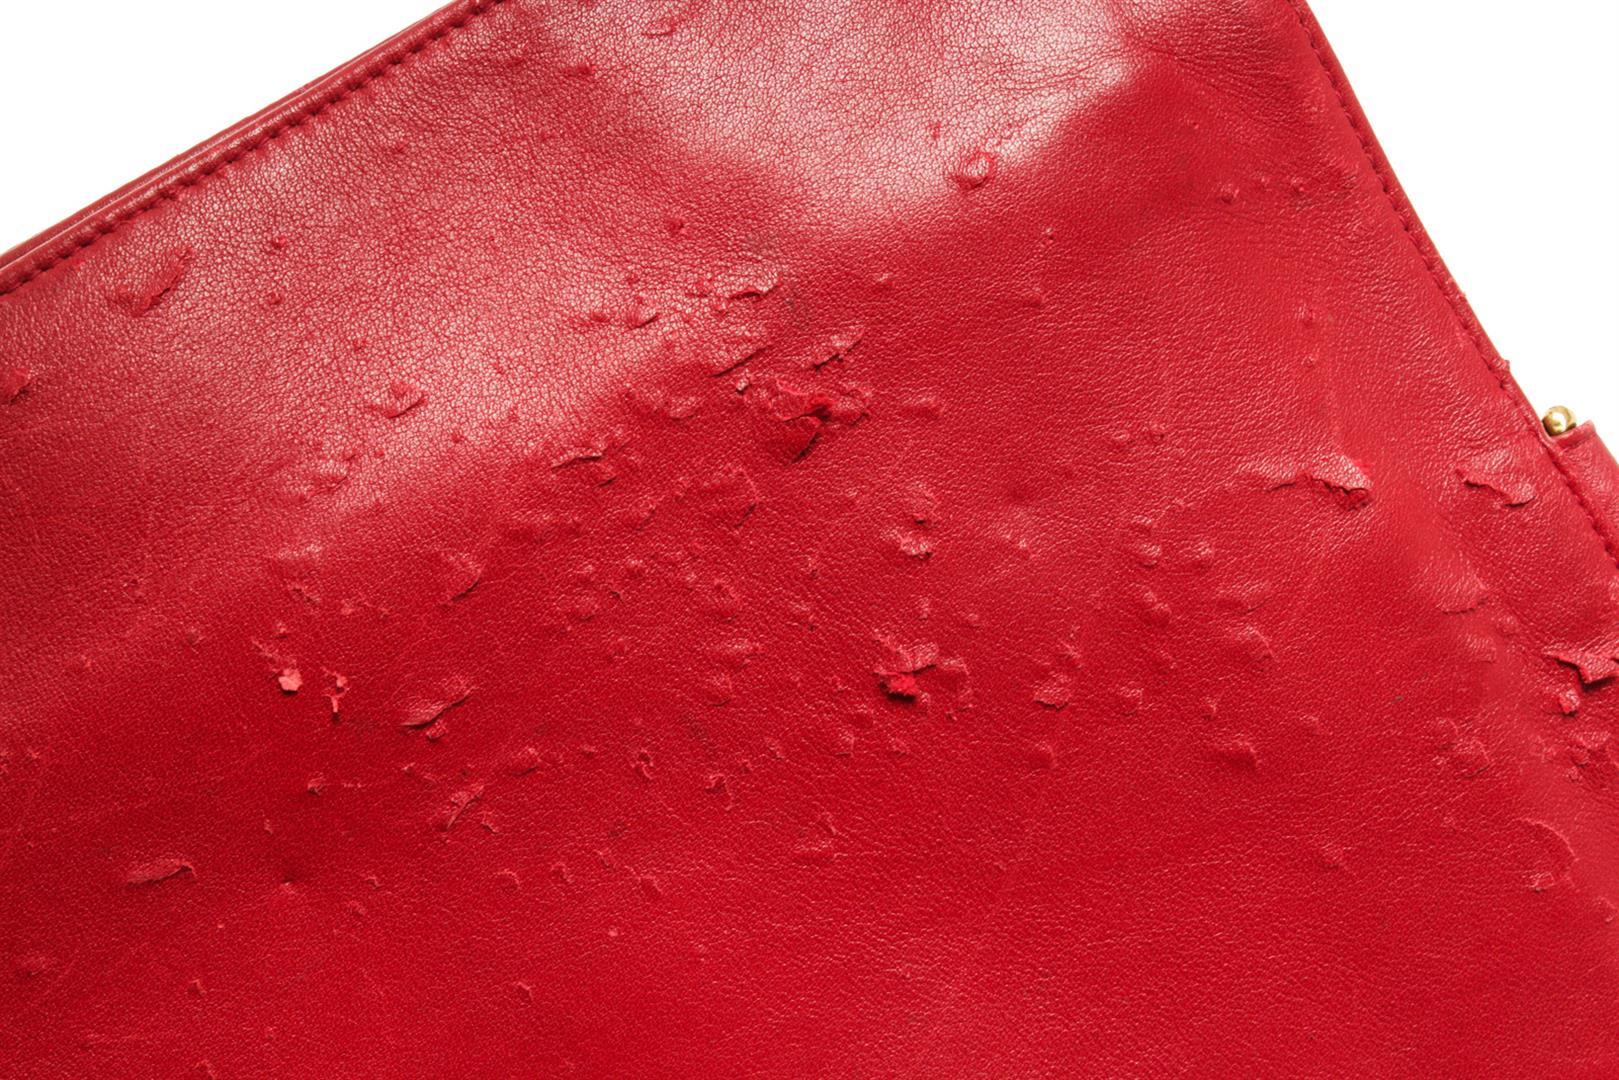 Chanel Red Lambskin Chain Shoulder Bag